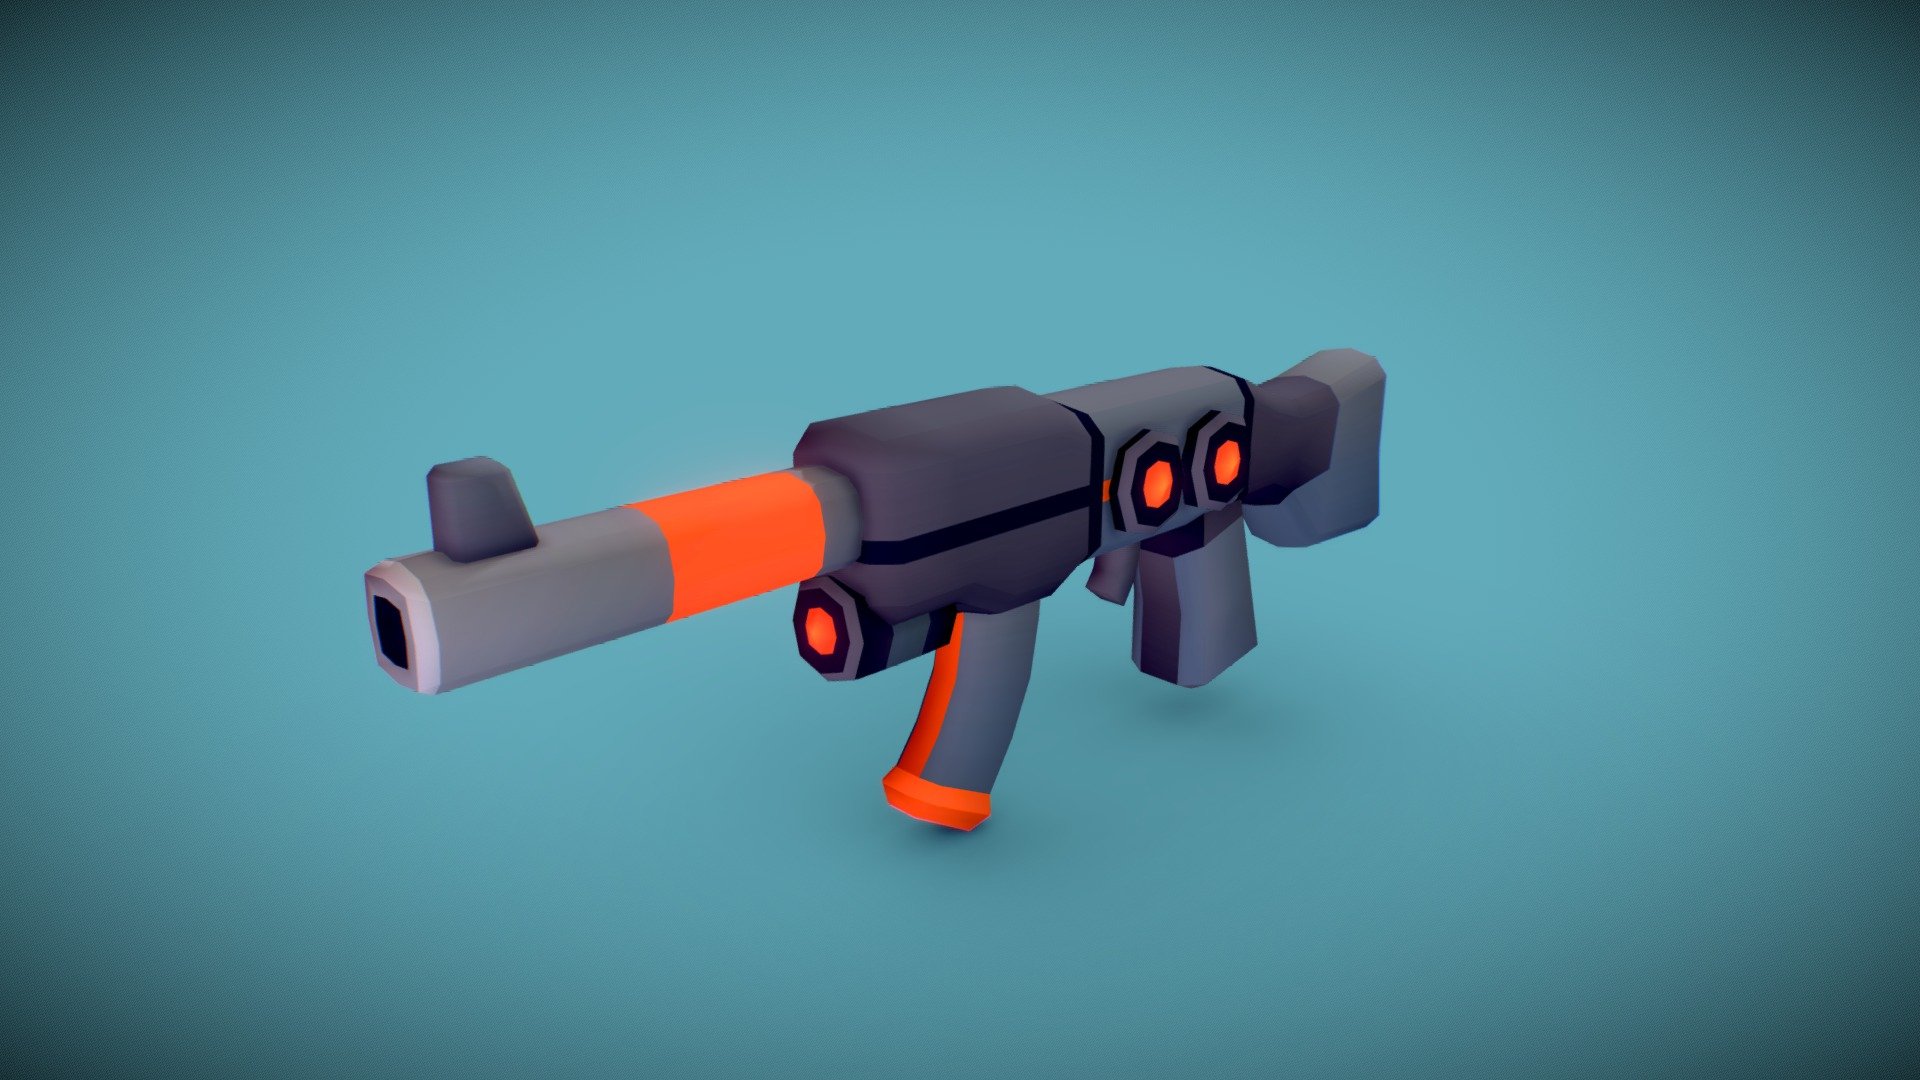 Scifi gun for the Tombstar game 3d model